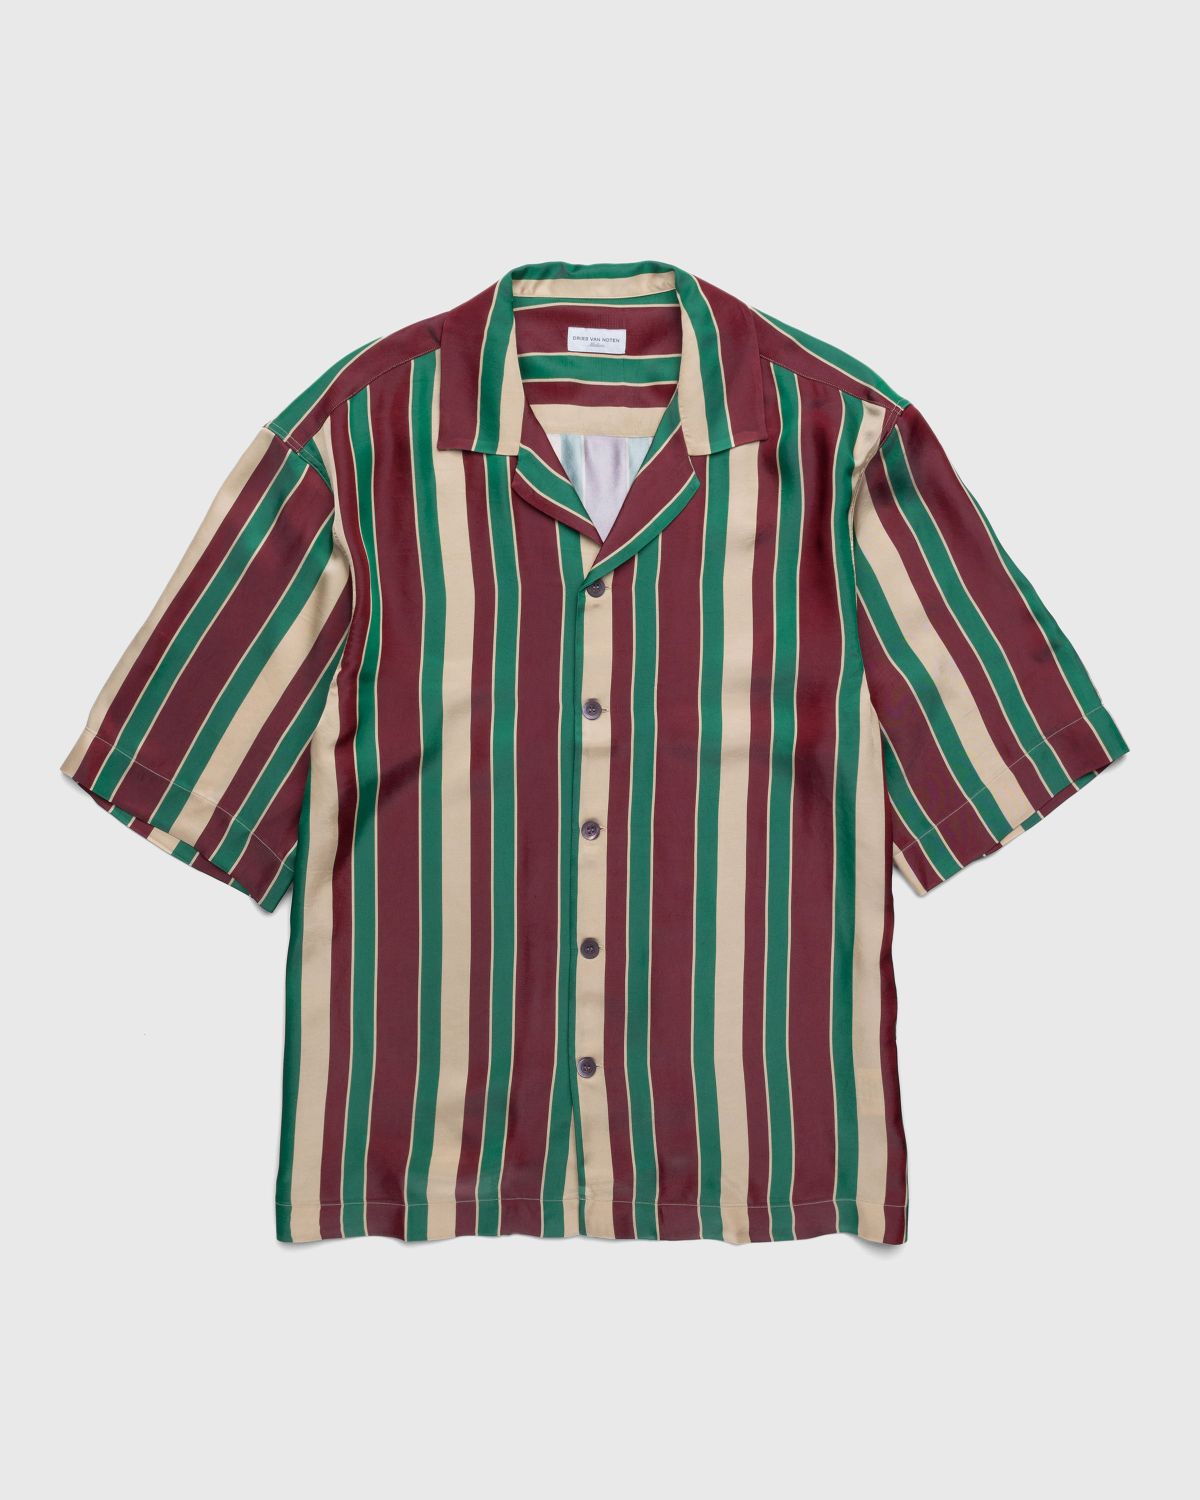 Dries van Noten – Cassi Shirt Bordeaux - Shortsleeve Shirts - Multi - Image 1